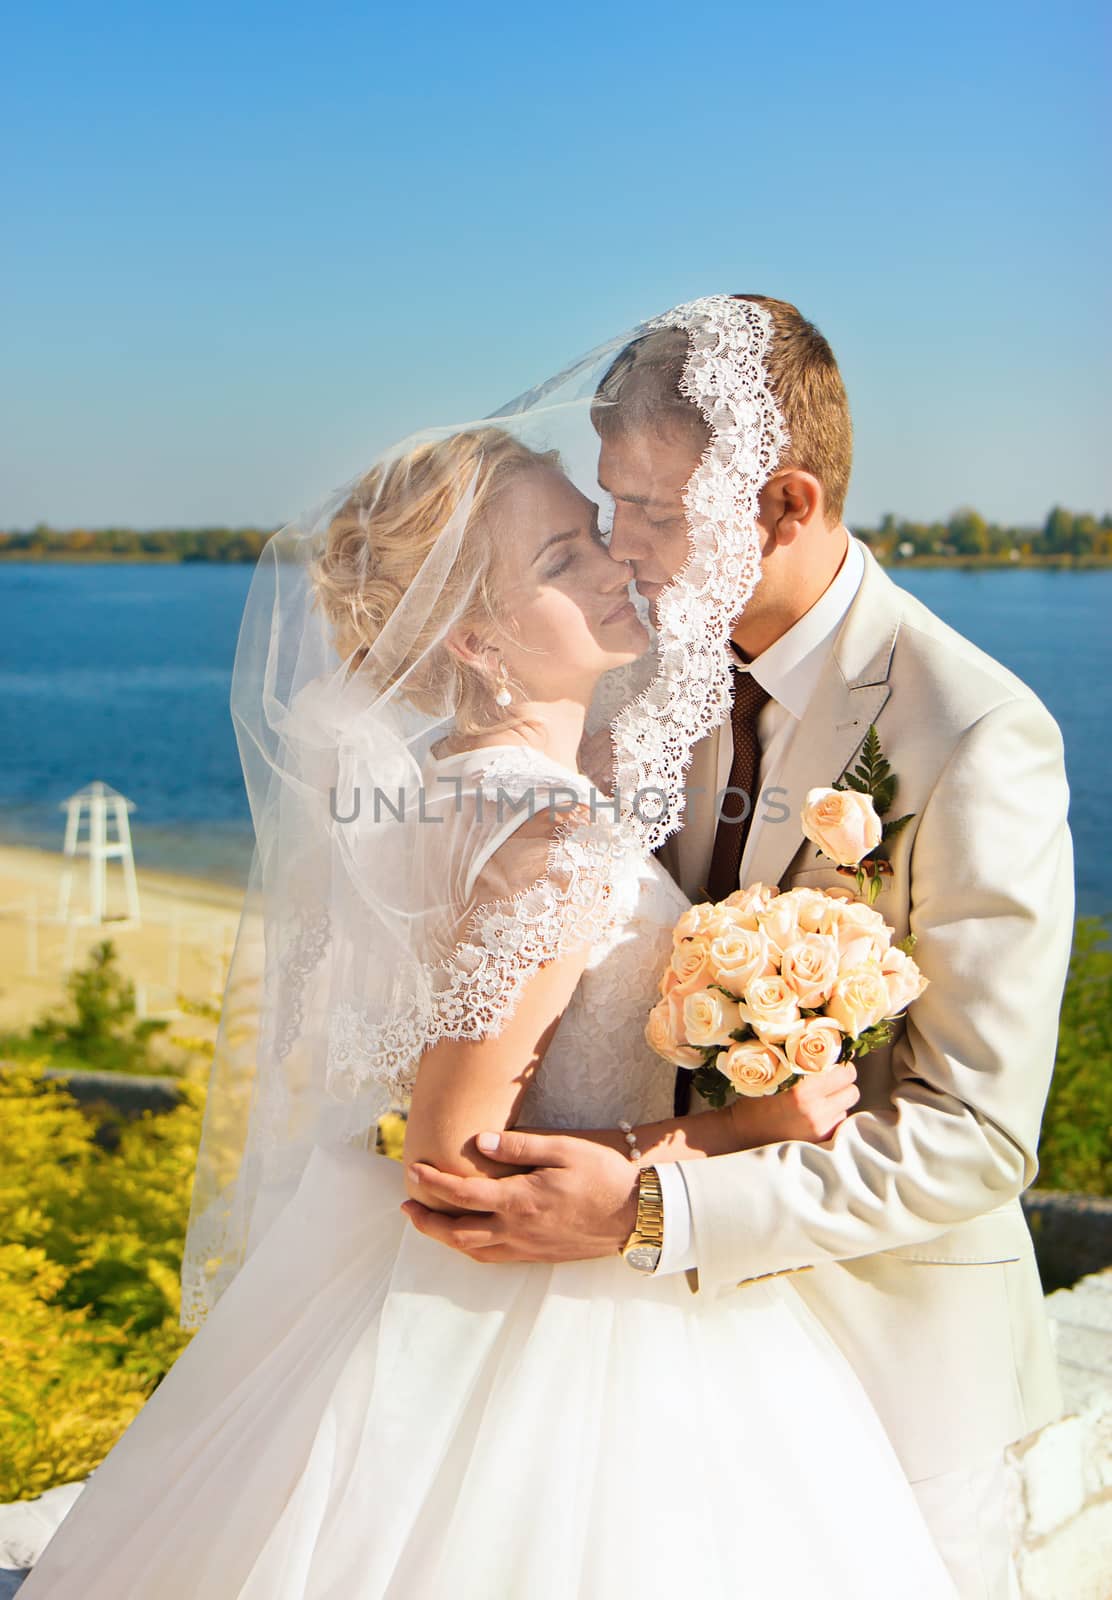 Loving bride and groom sheltered veil bride embrace on the river bank